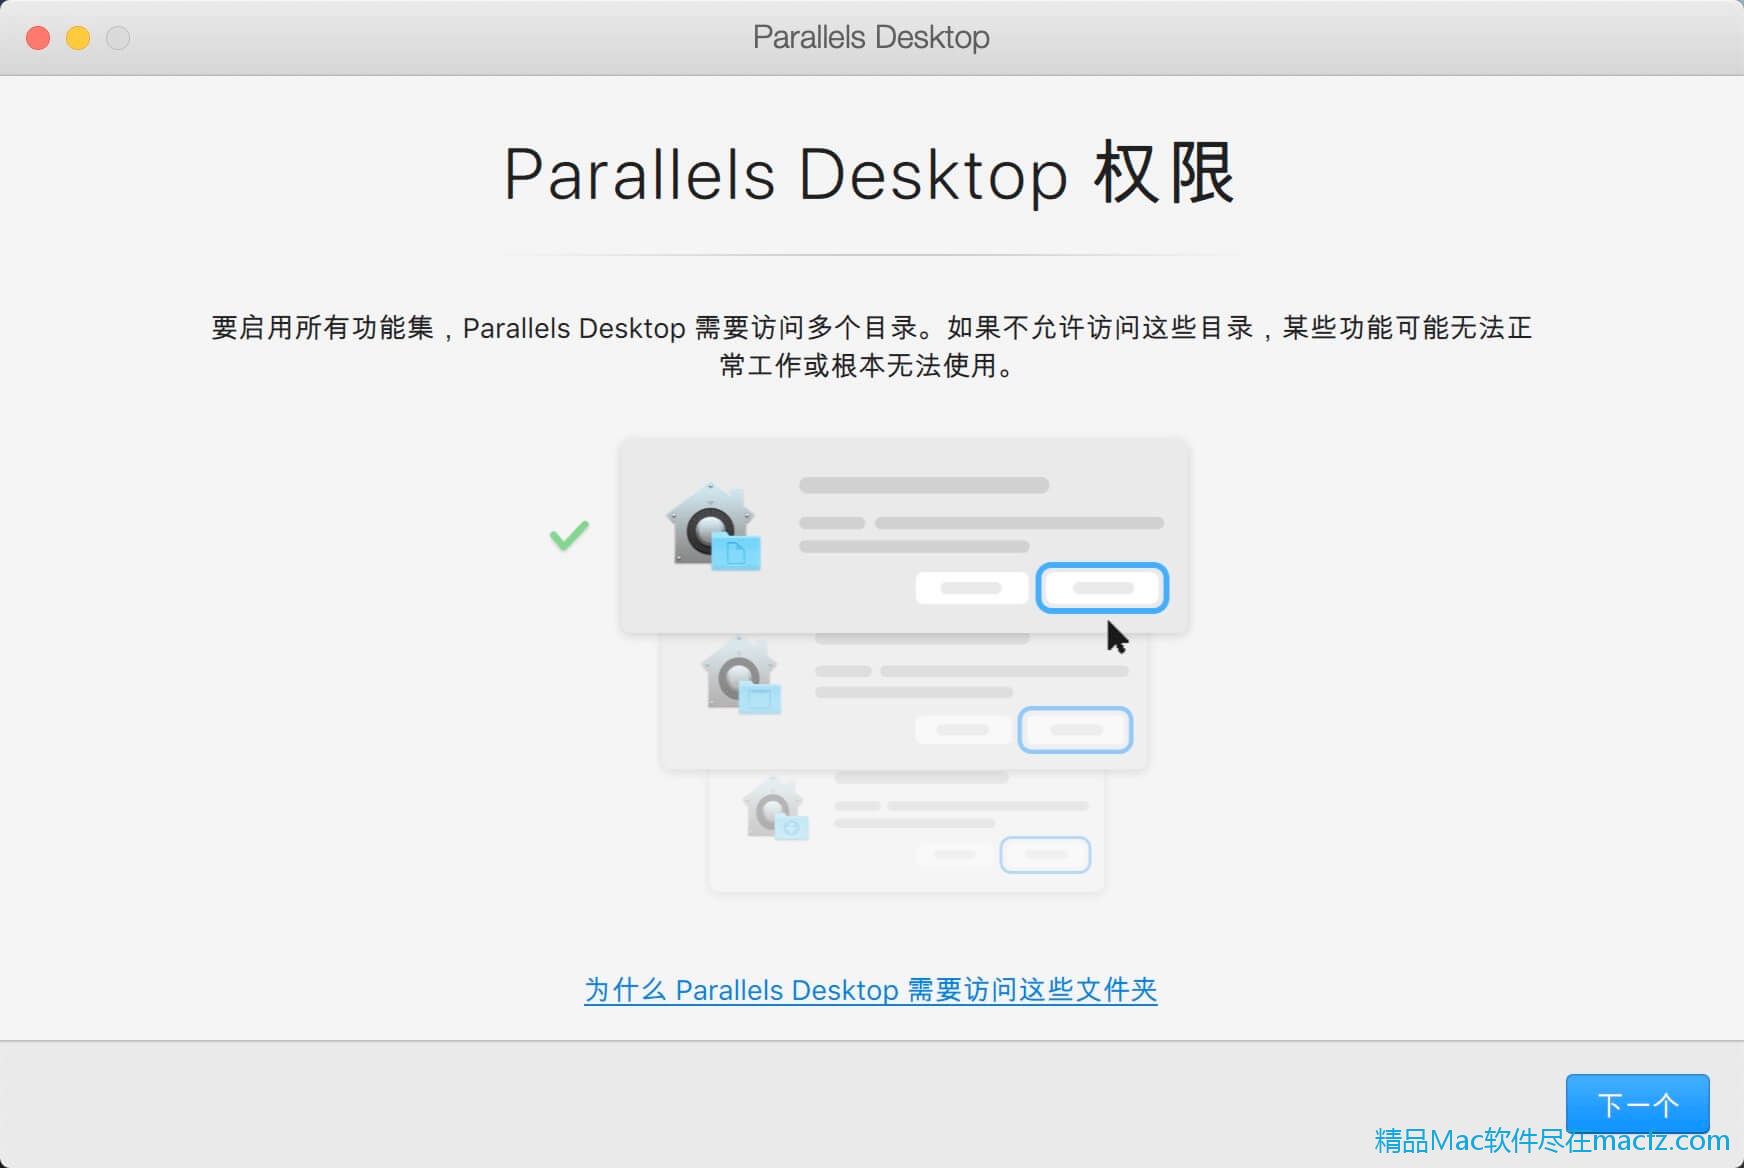  Parallels Desktop 16 无法联网 解决方法